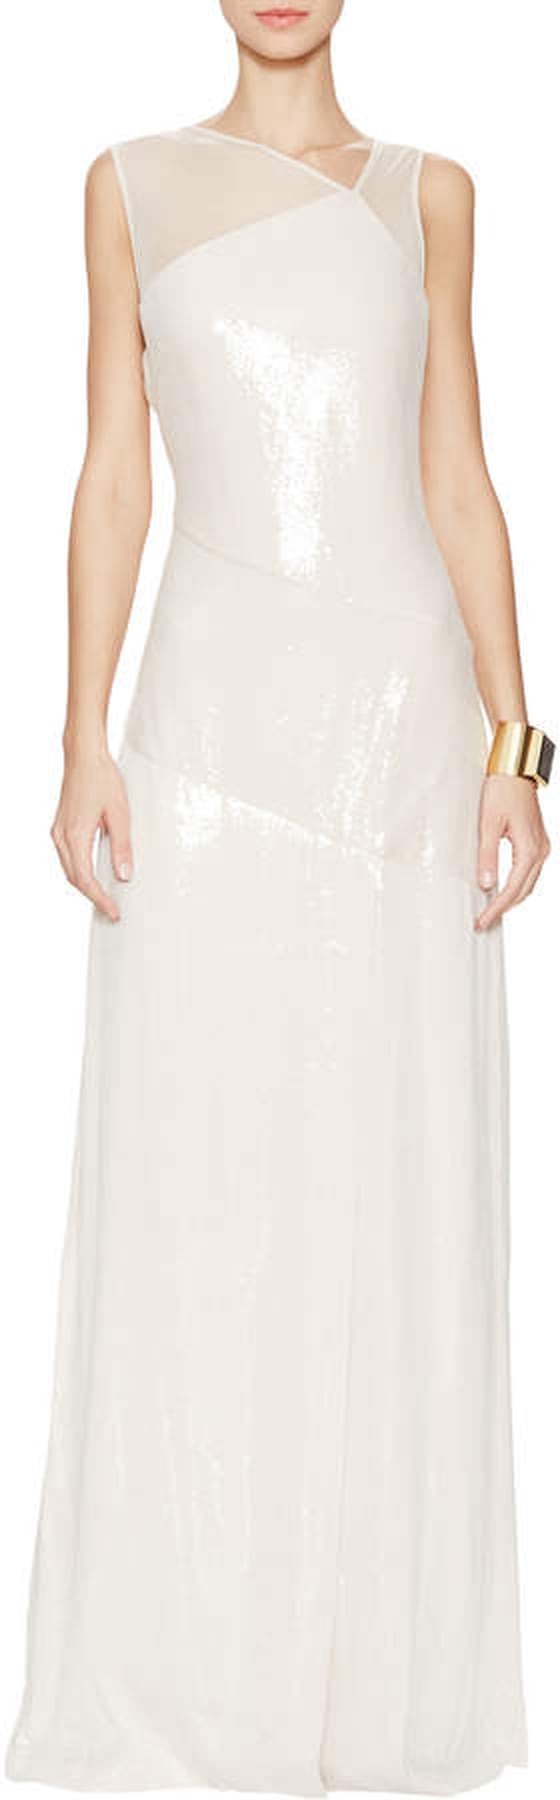 Dakota Johnsons White Dress At Fifty Shades Freed Premiere Popsugar Fashion 